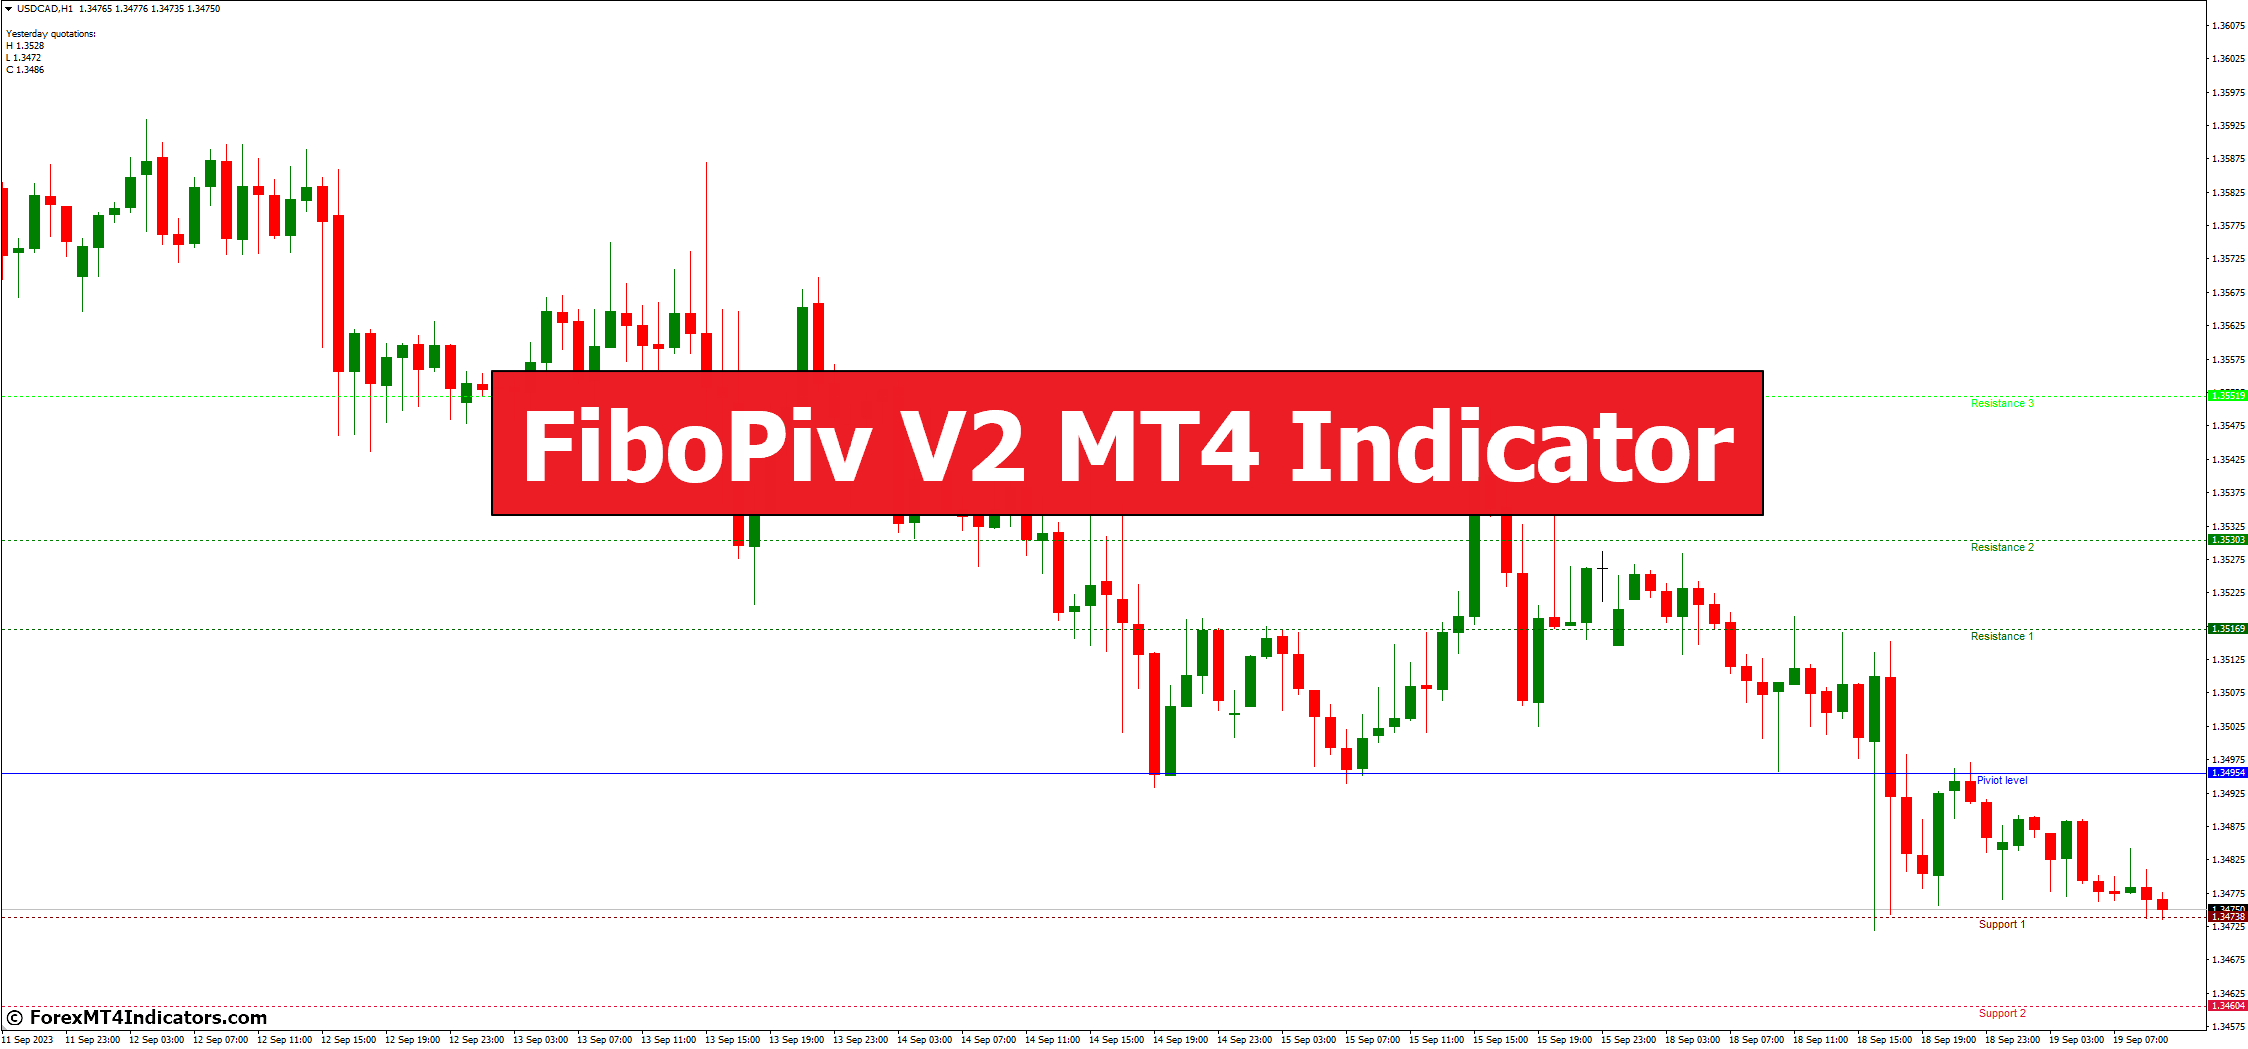 FiboPiv V2 MT4 Indicator